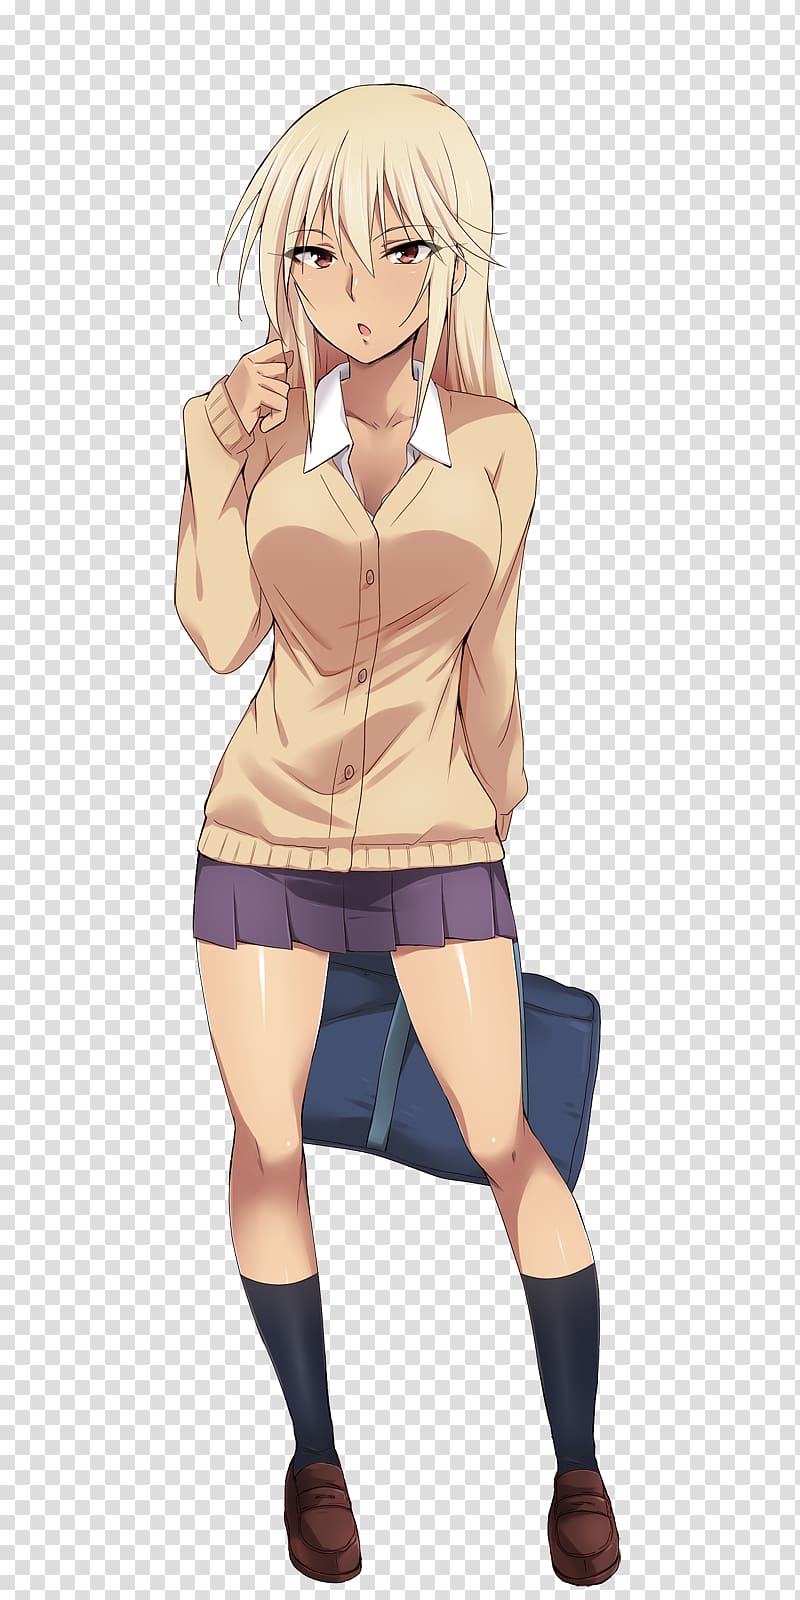 Human leg Arm Limb Brown hair, Anime transparent background PNG clipart